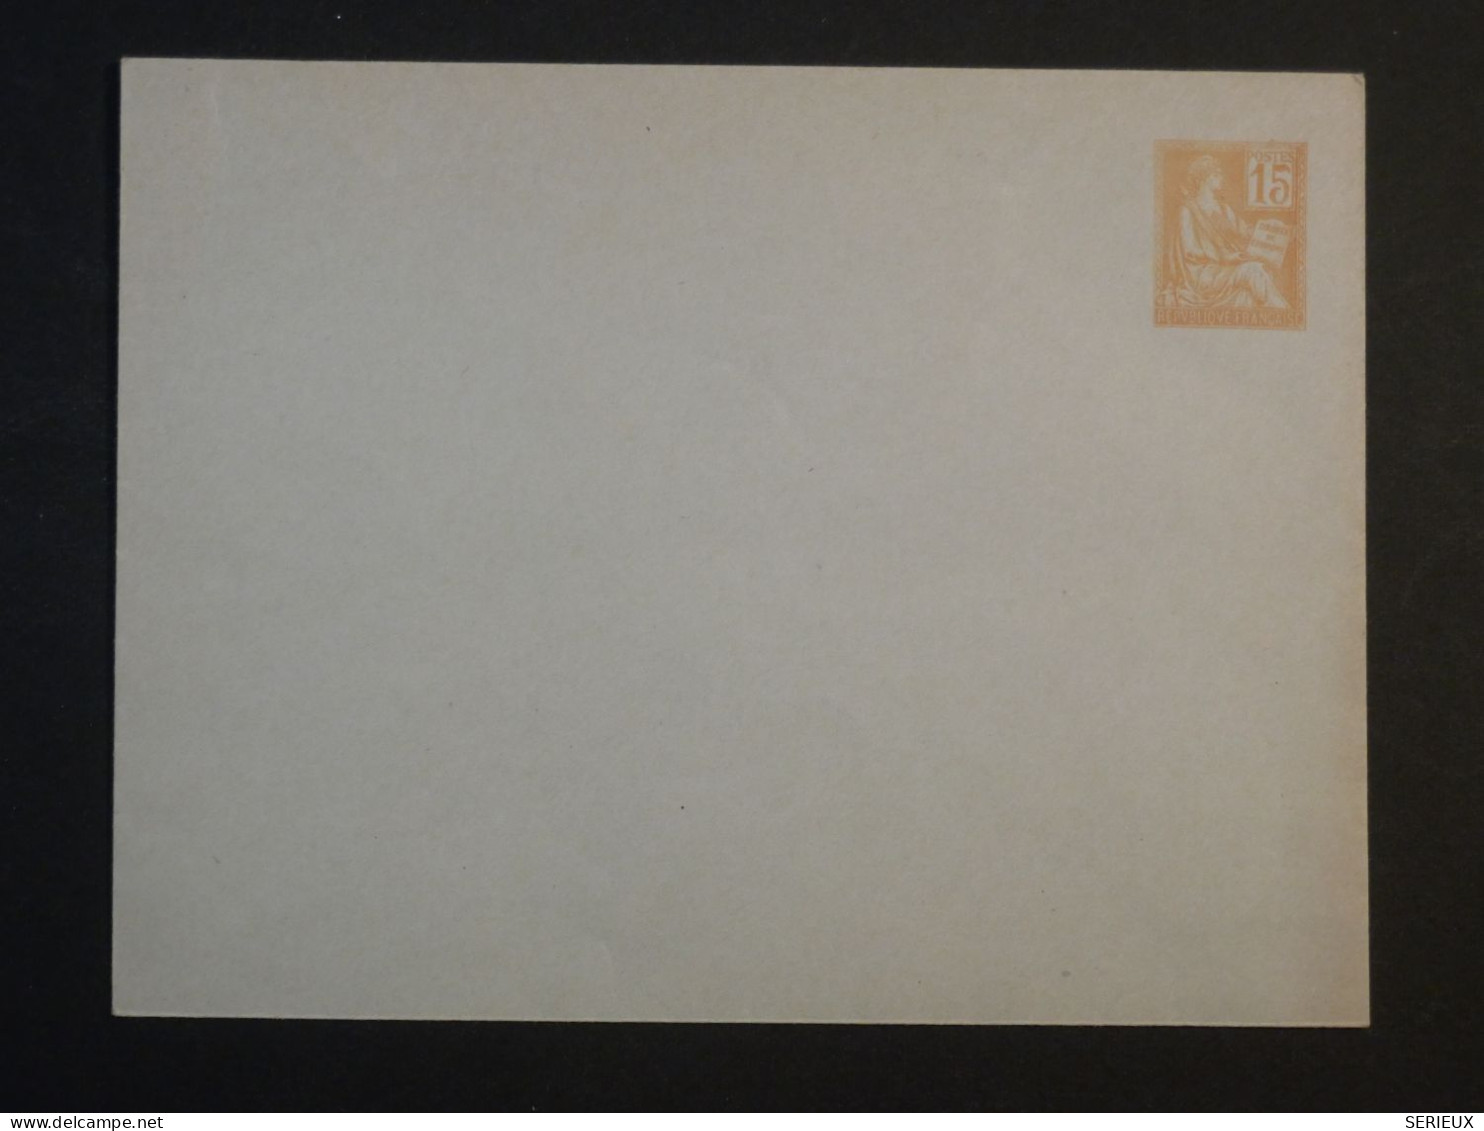 DF14  FRANCE BELLE GRANDE LETTRE  ENTIER MOUCHON  15C ENV. 1910  NON VOYAGEE++++ - Bigewerkte Envelop  (voor 1995)